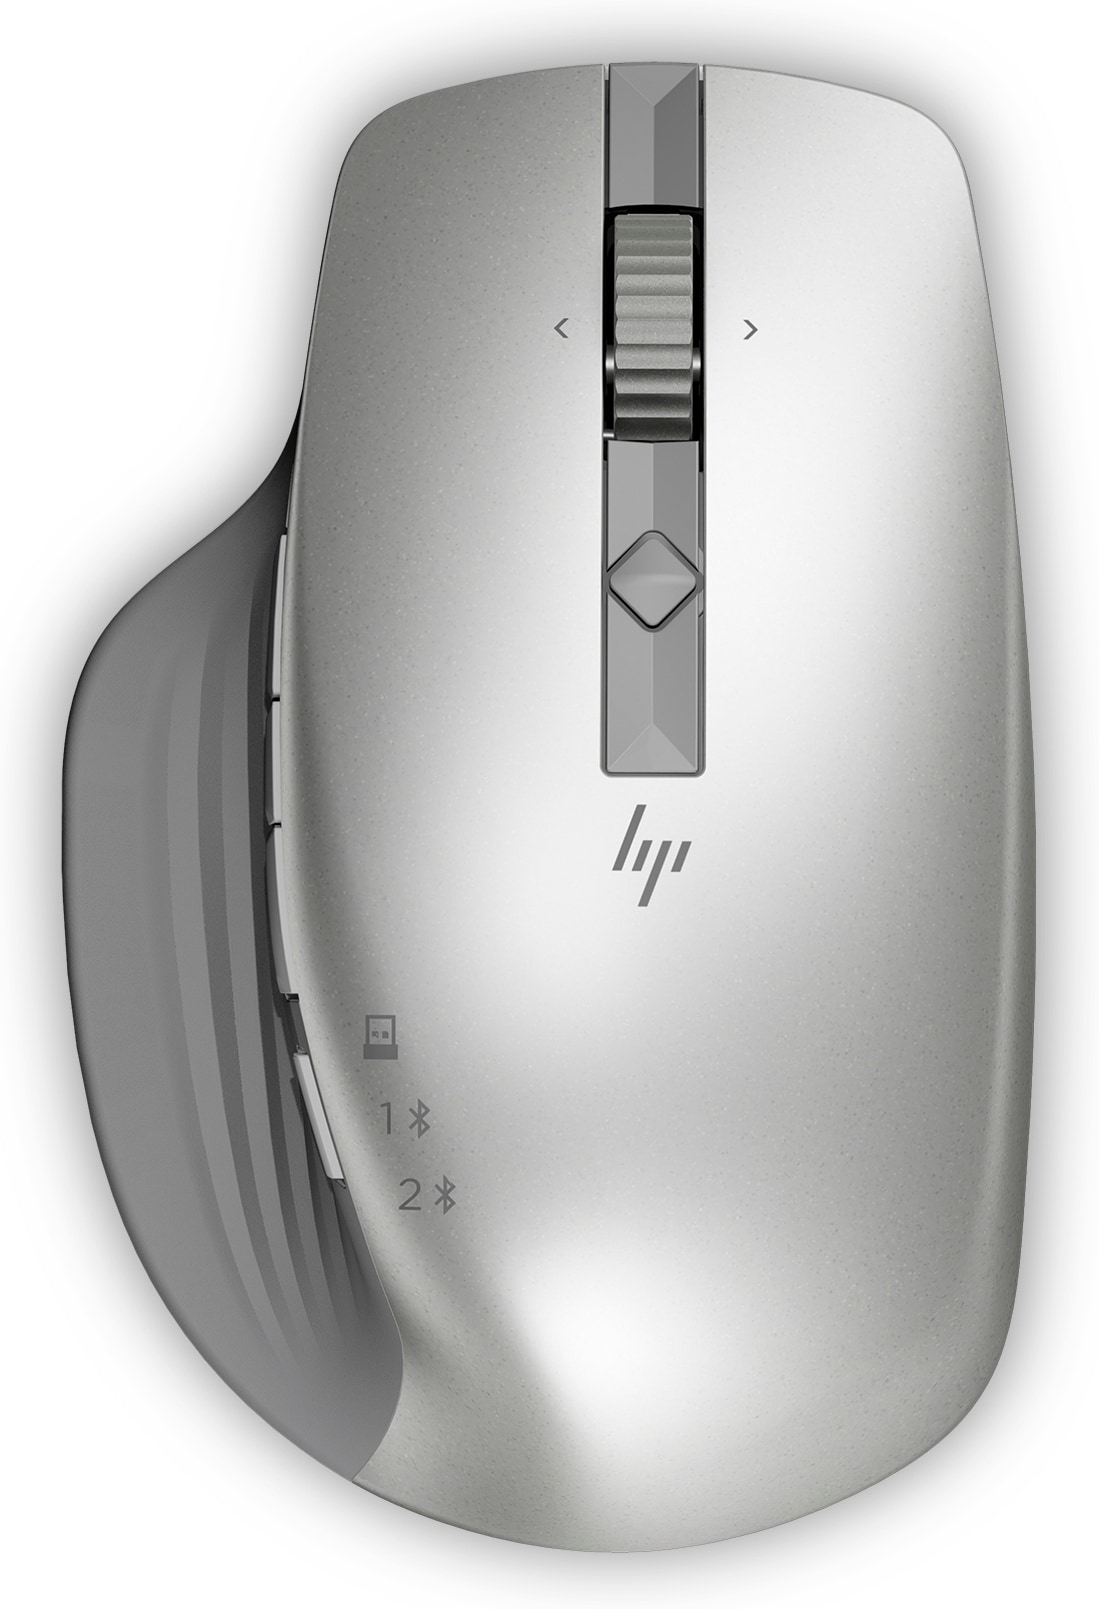 HP 930 Creator trådlös mus